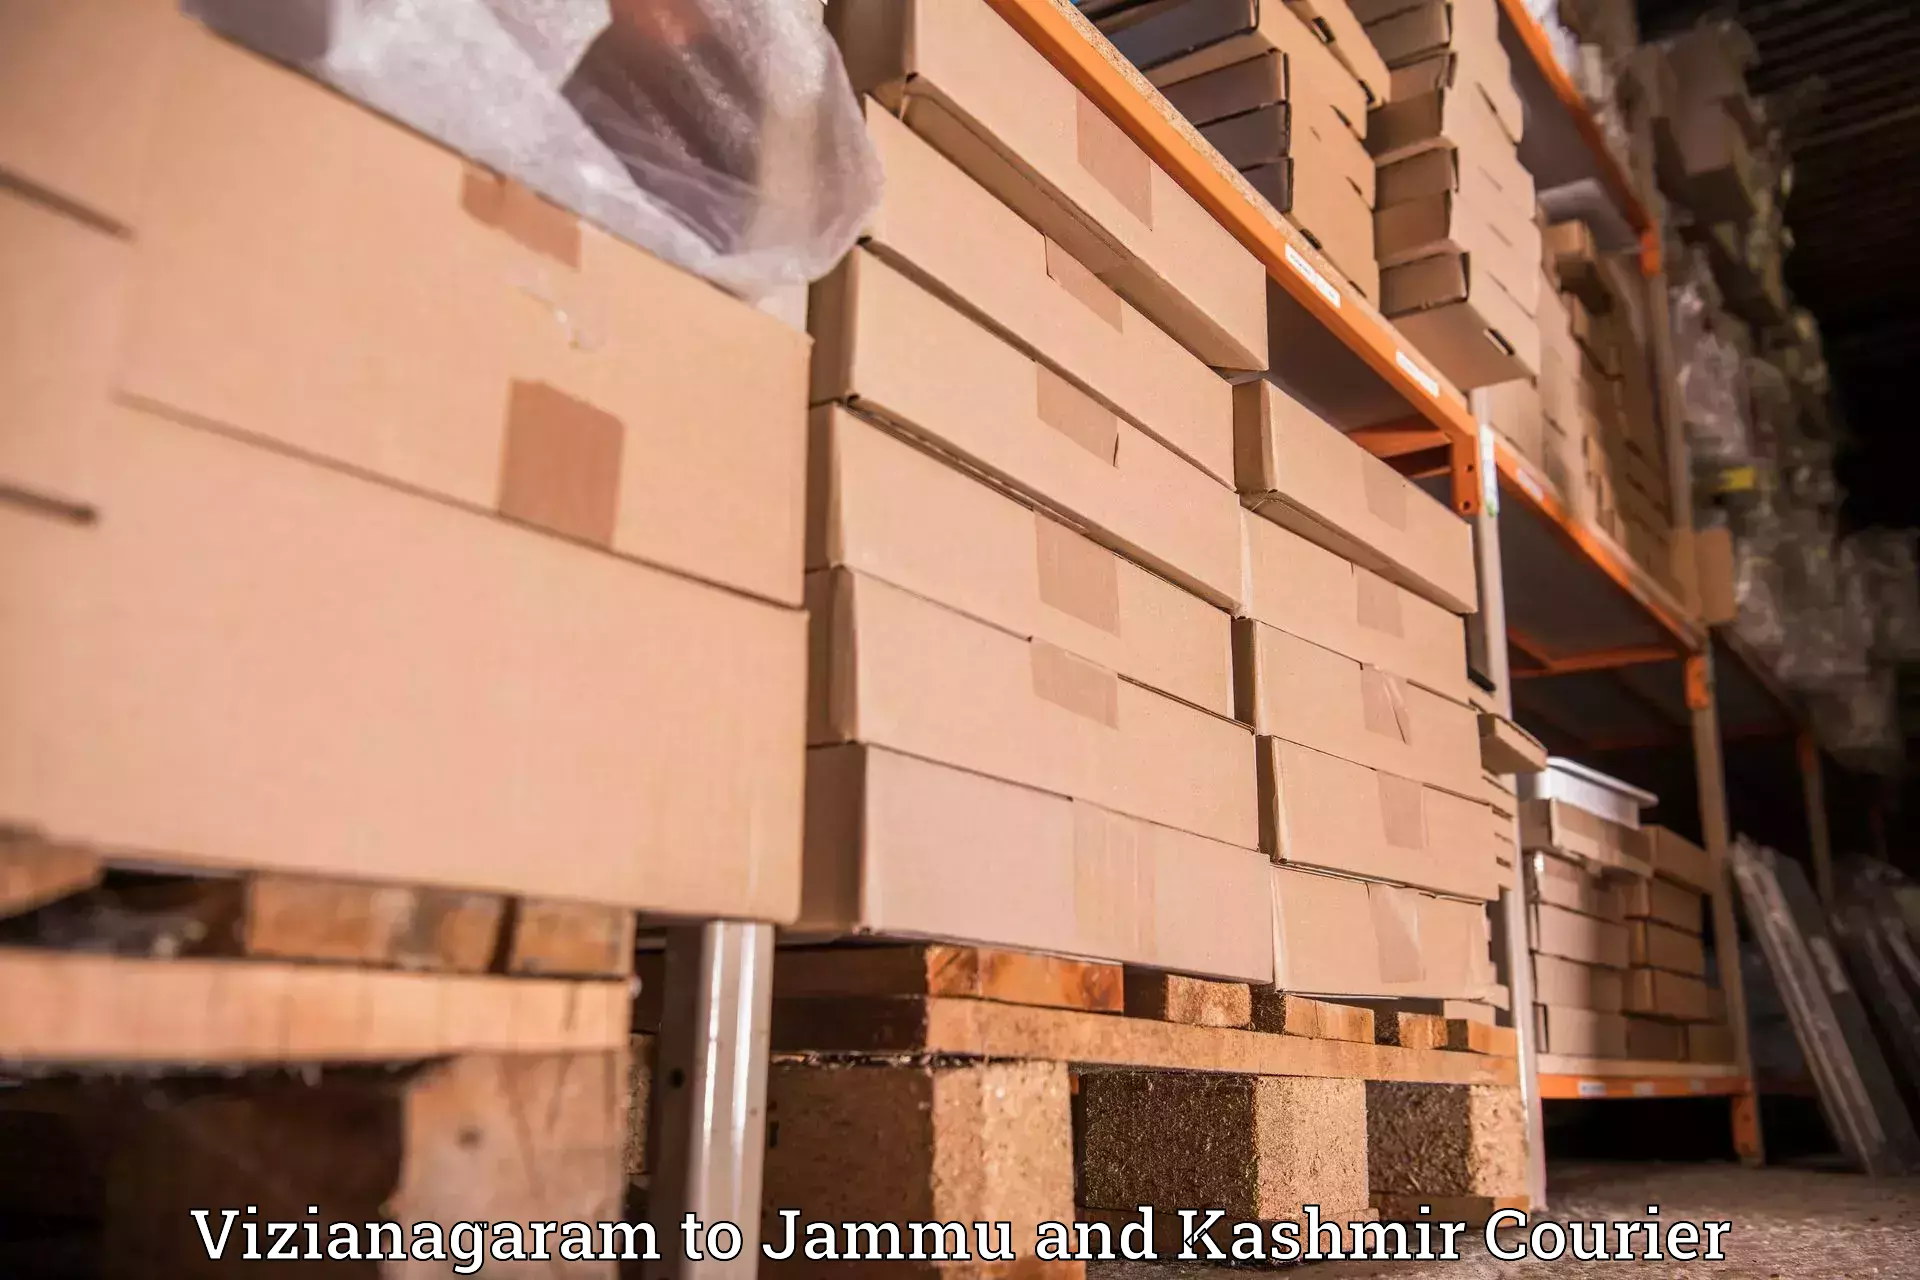 Global logistics network Vizianagaram to Ramban